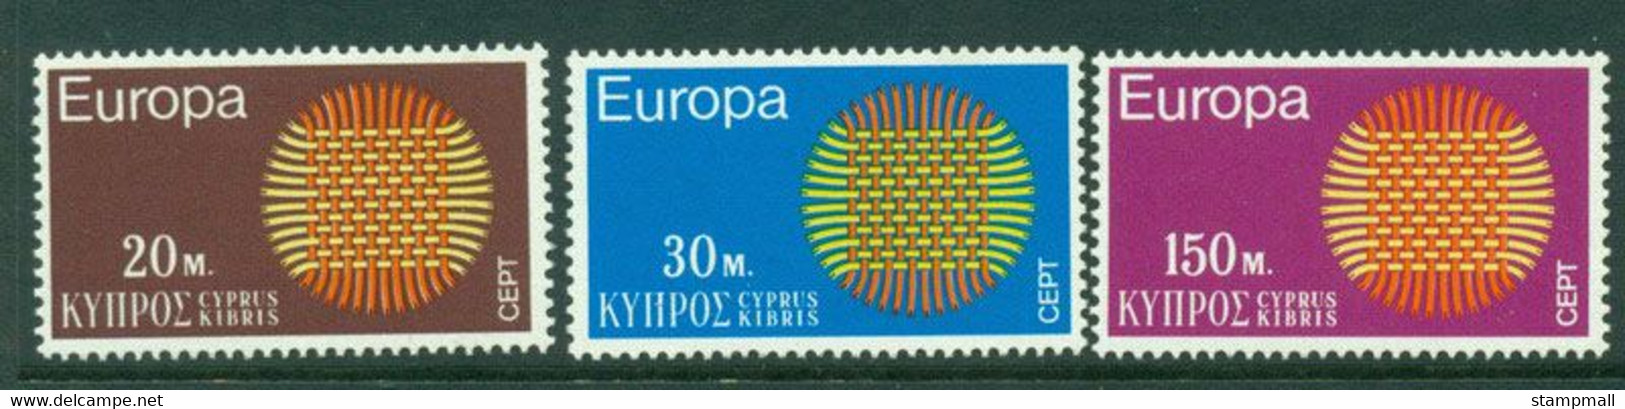 Cyprus 1970 Europa MUH Lot16731 - Unused Stamps